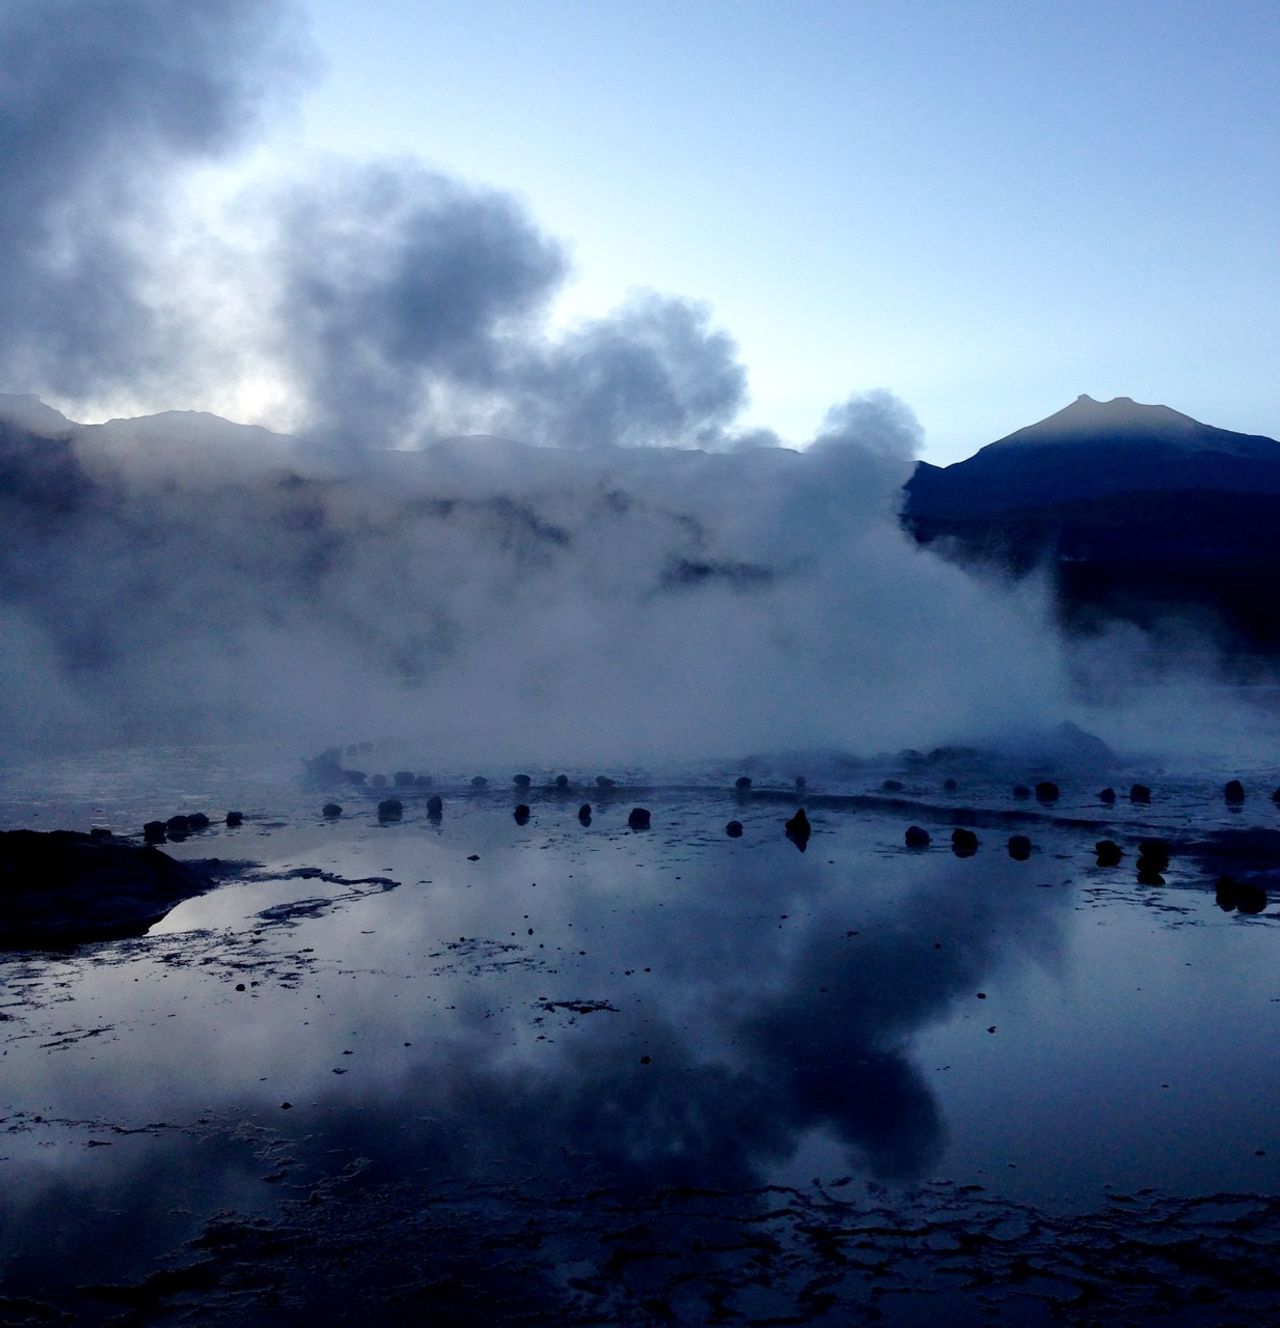 A geyser spewing steam before sunrise.